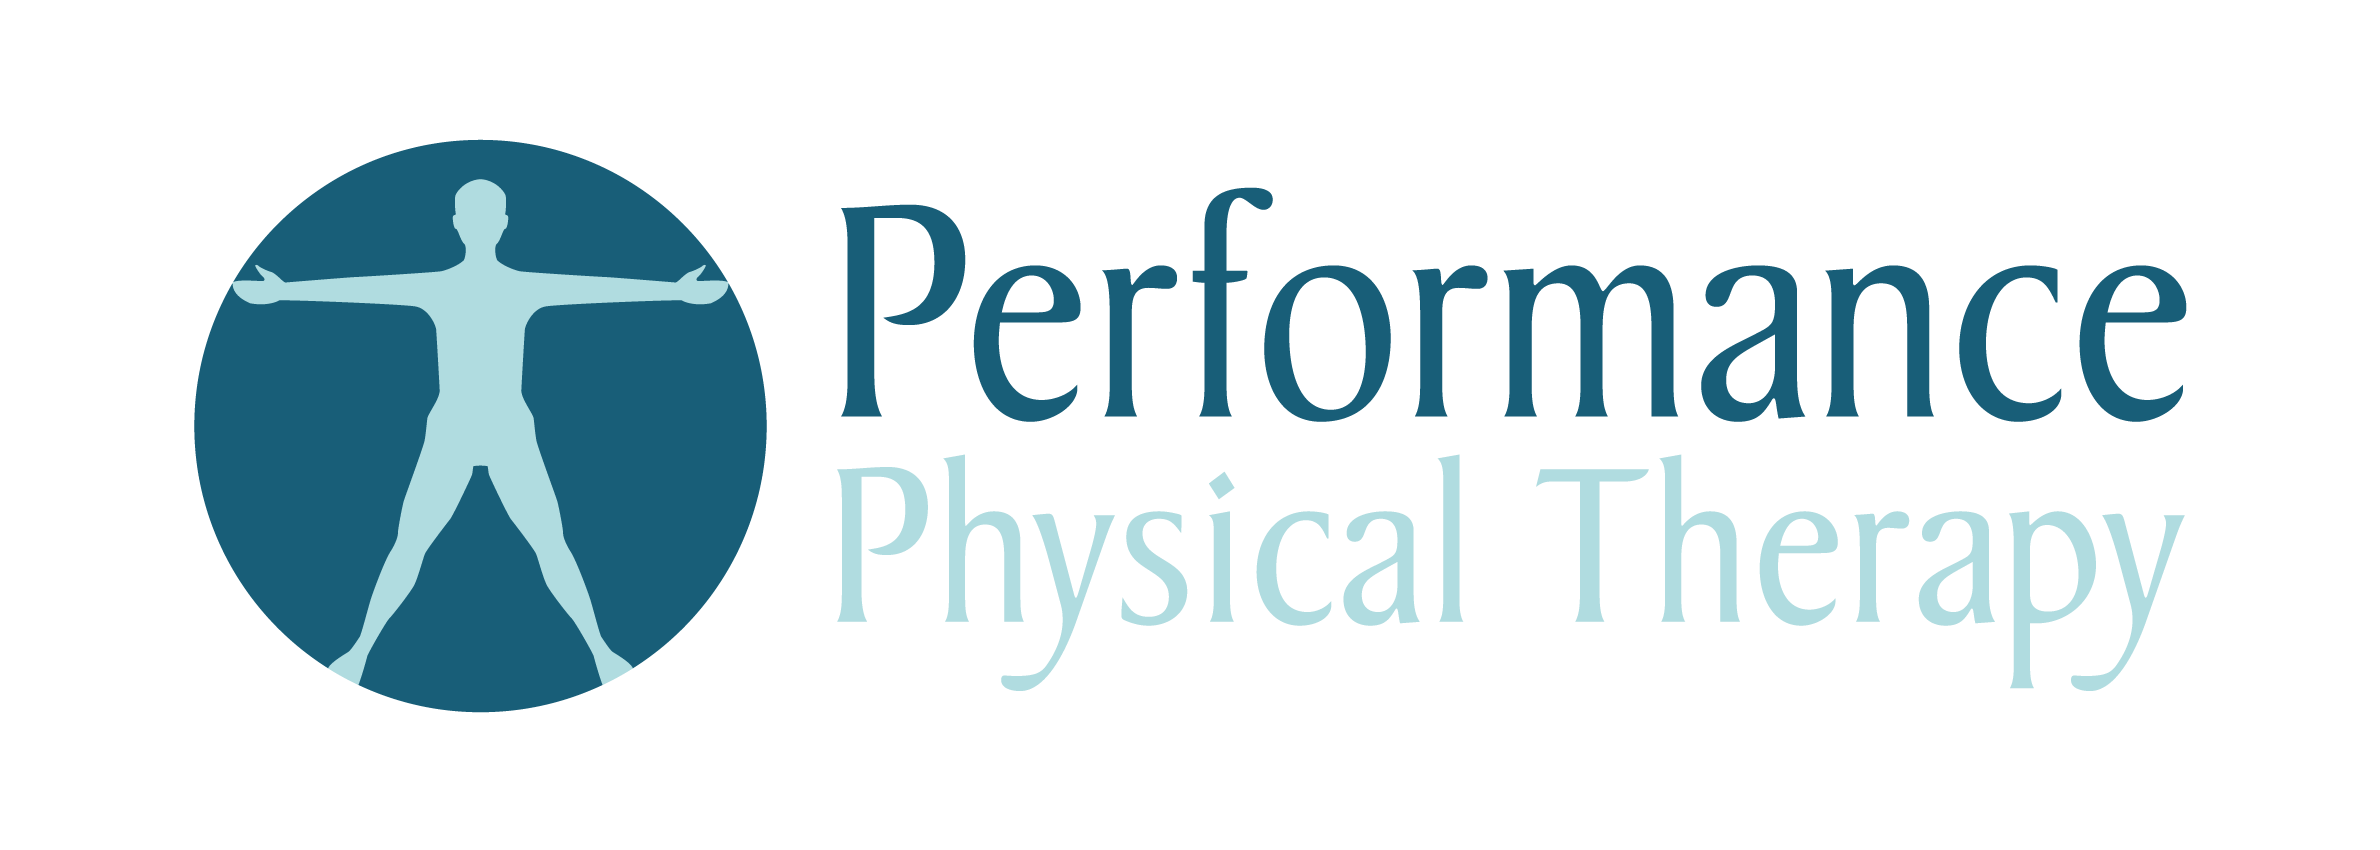 Performance PT logo